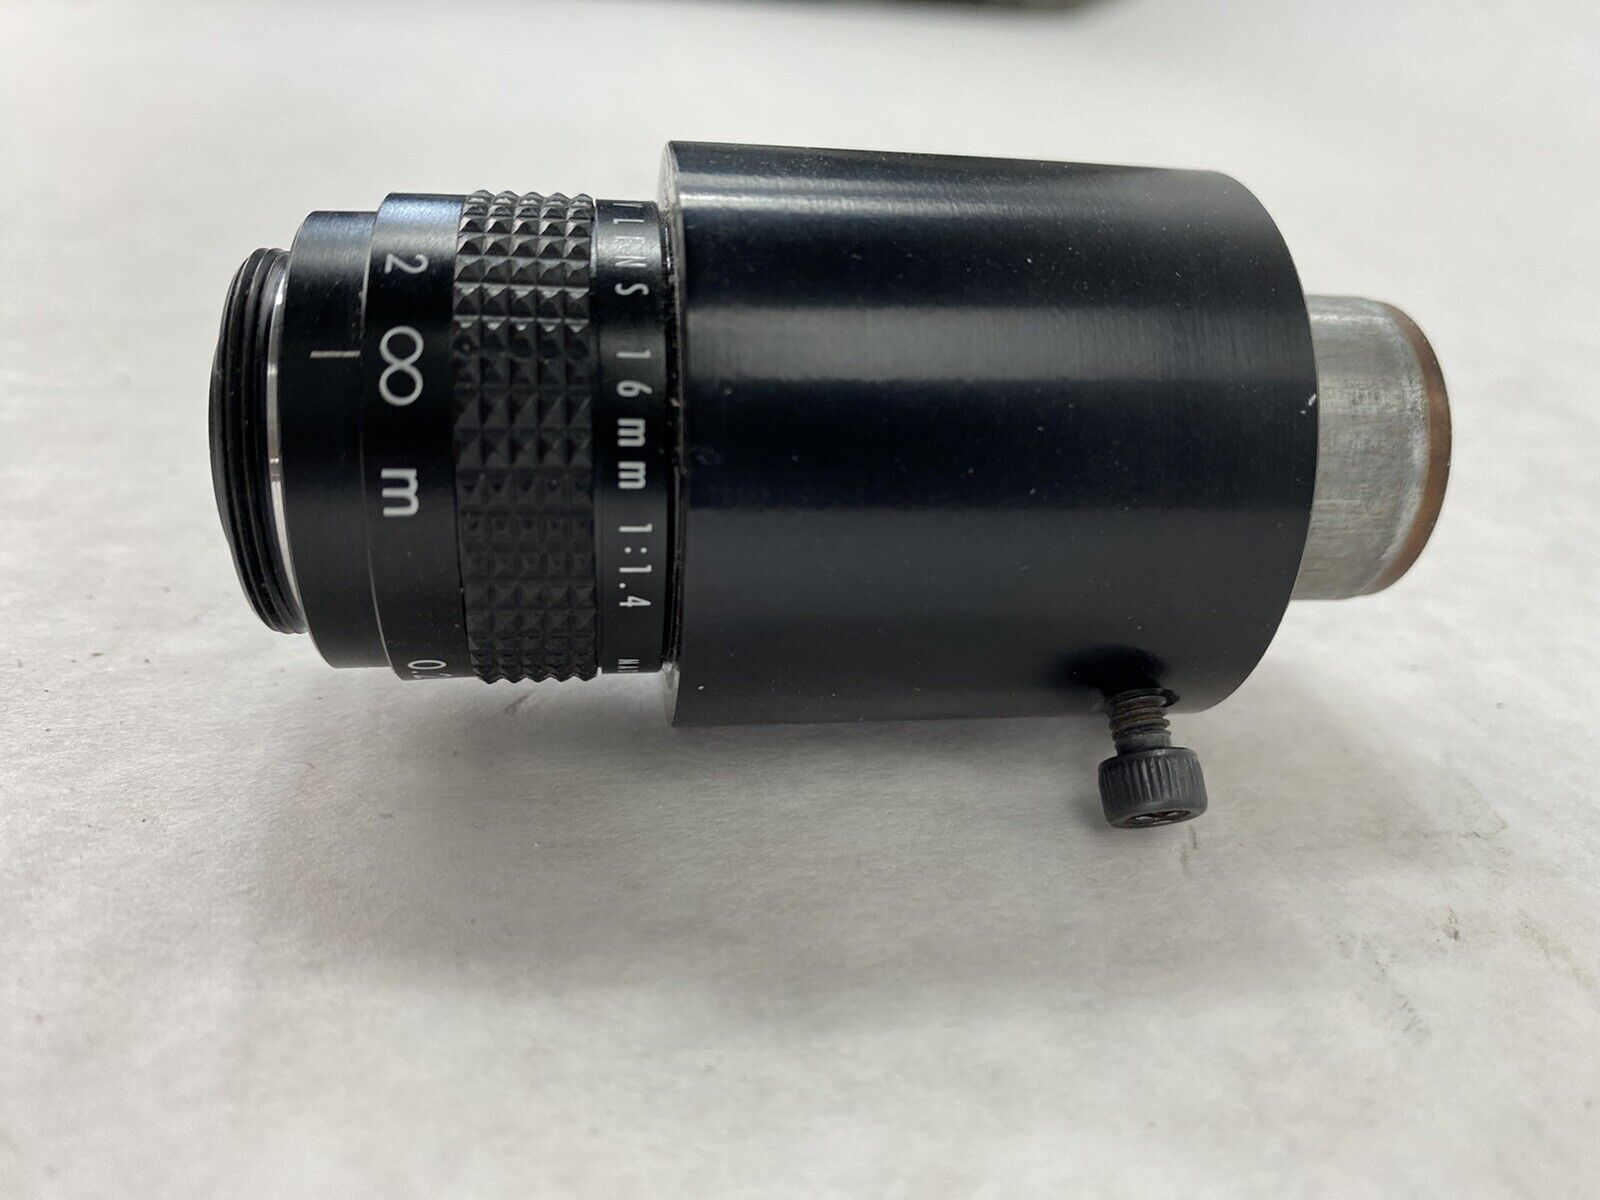 Computar 143914 16mm 1:1.4 0.2 to 2 m CCTV TV Lens